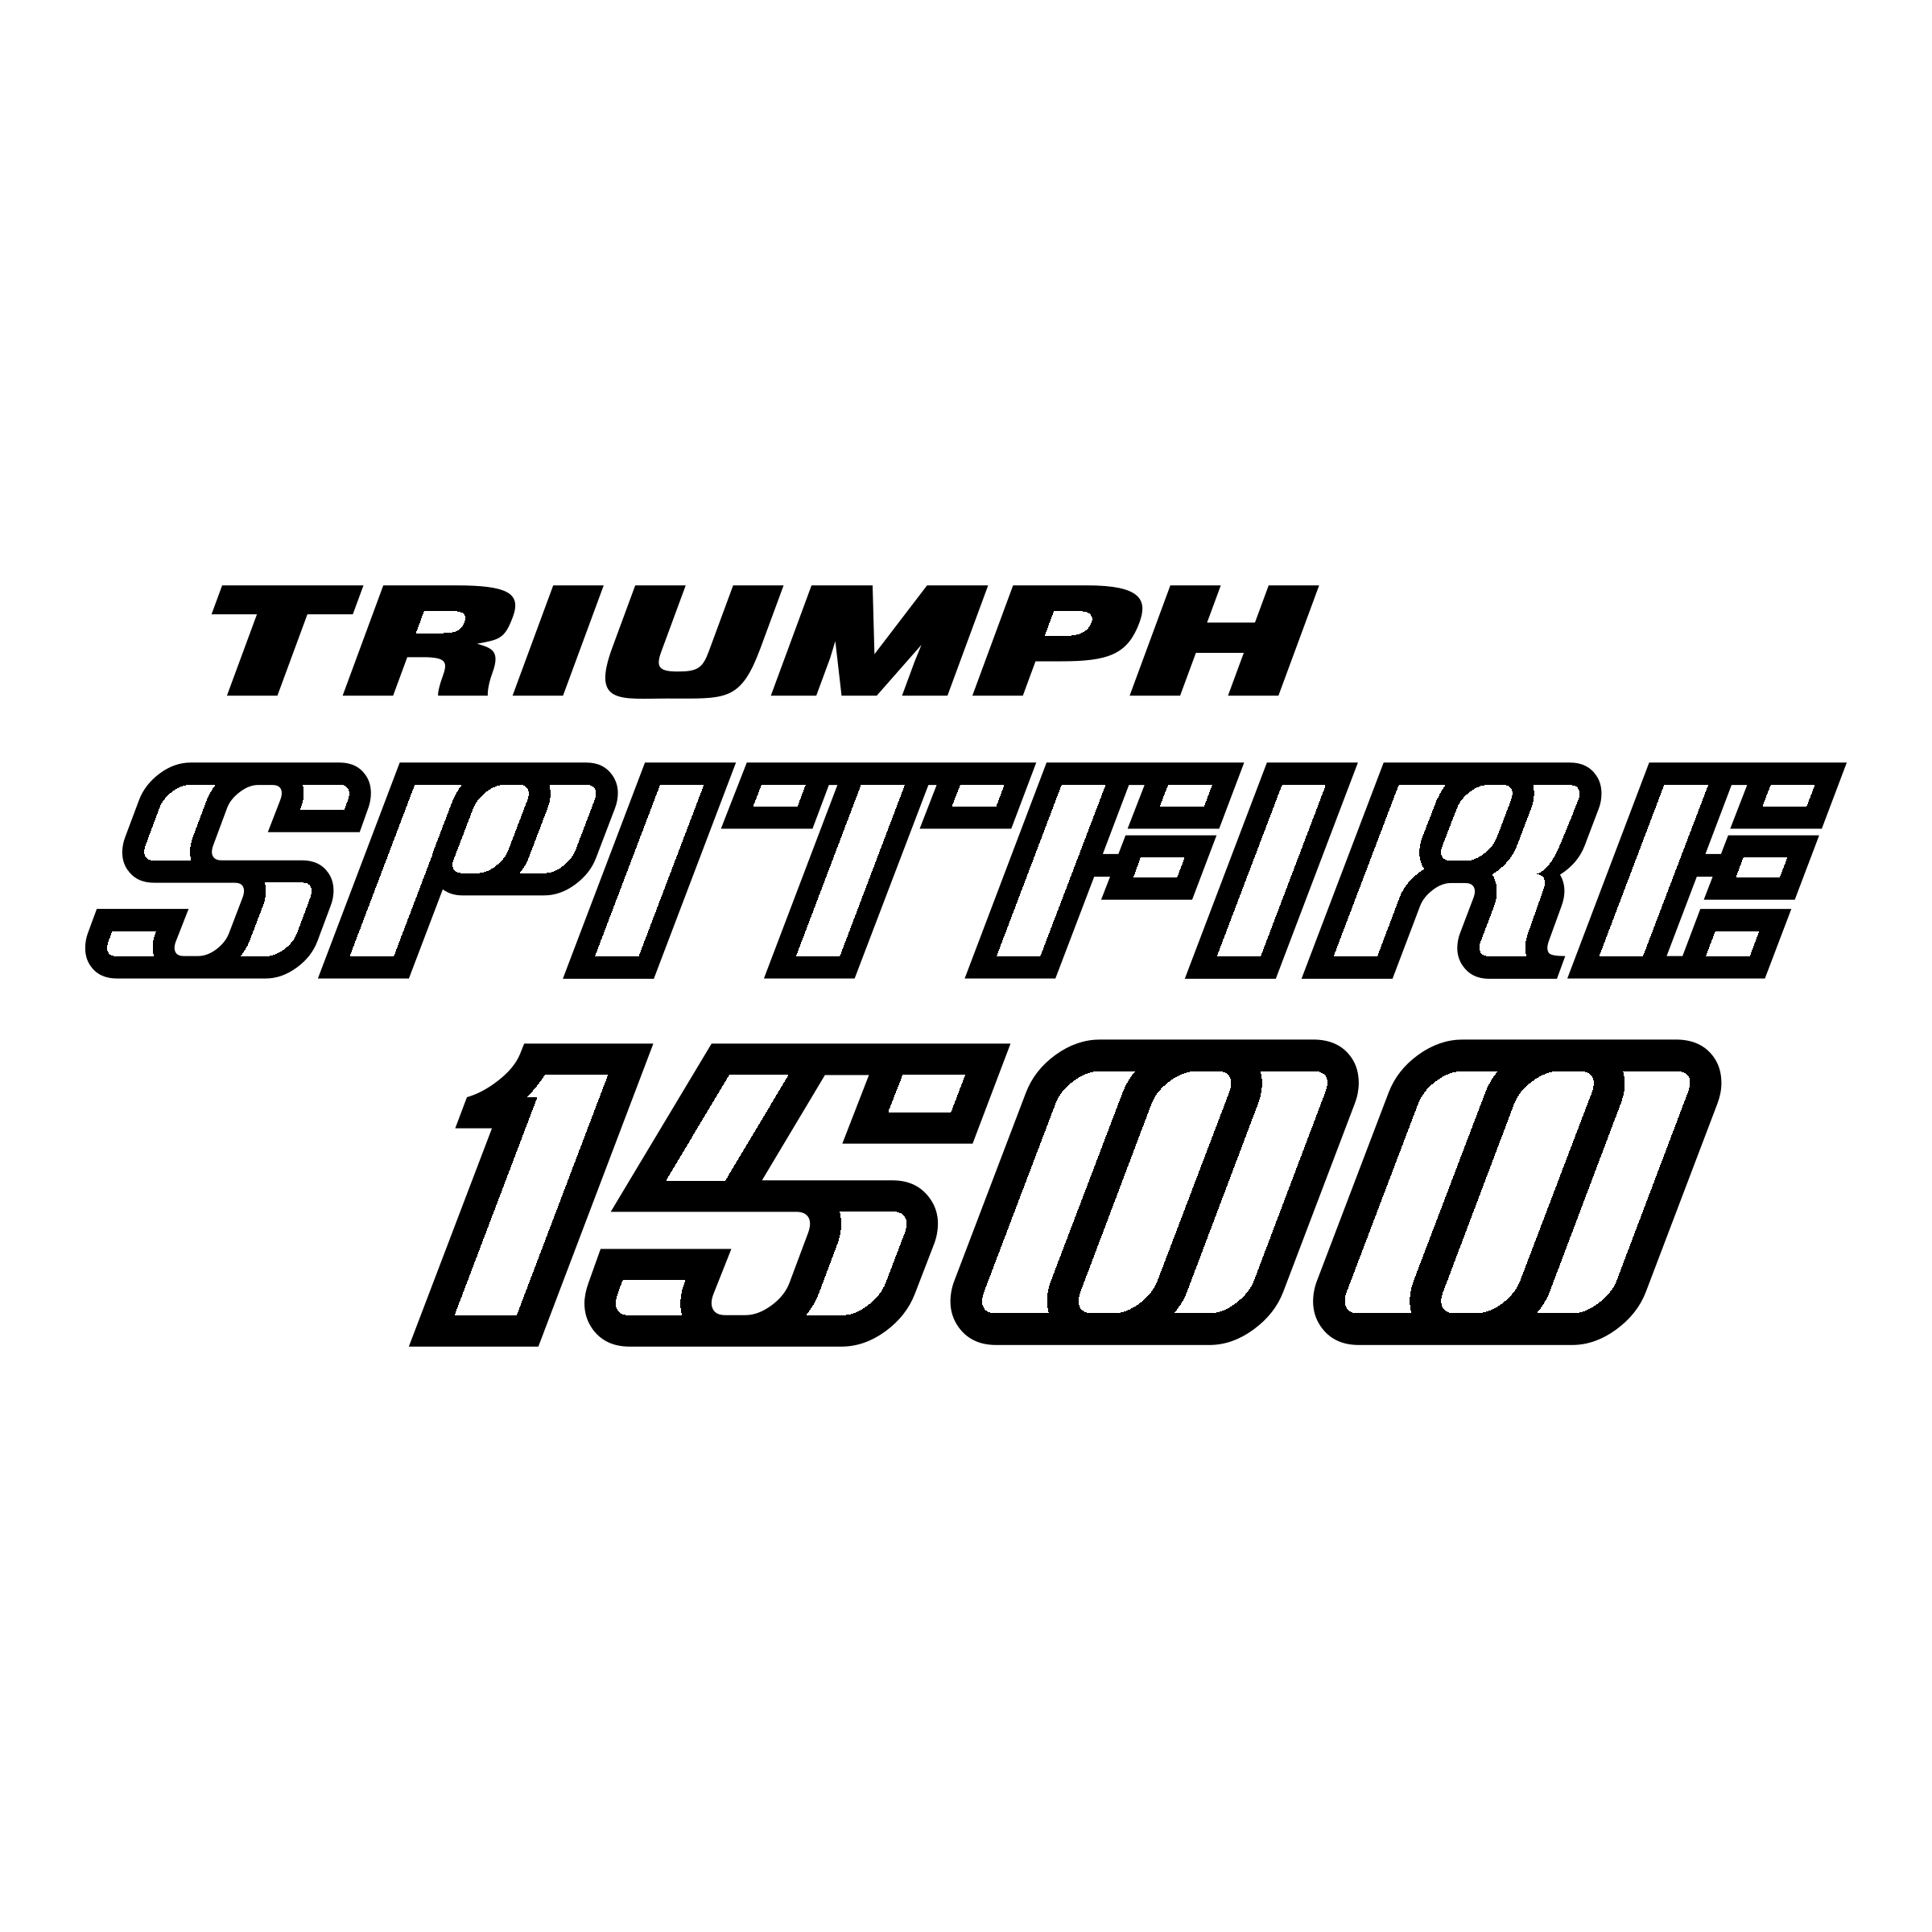 Triumph Spitfire Logo - Spitfire 1500 Logo PNG Transparent & SVG Vector